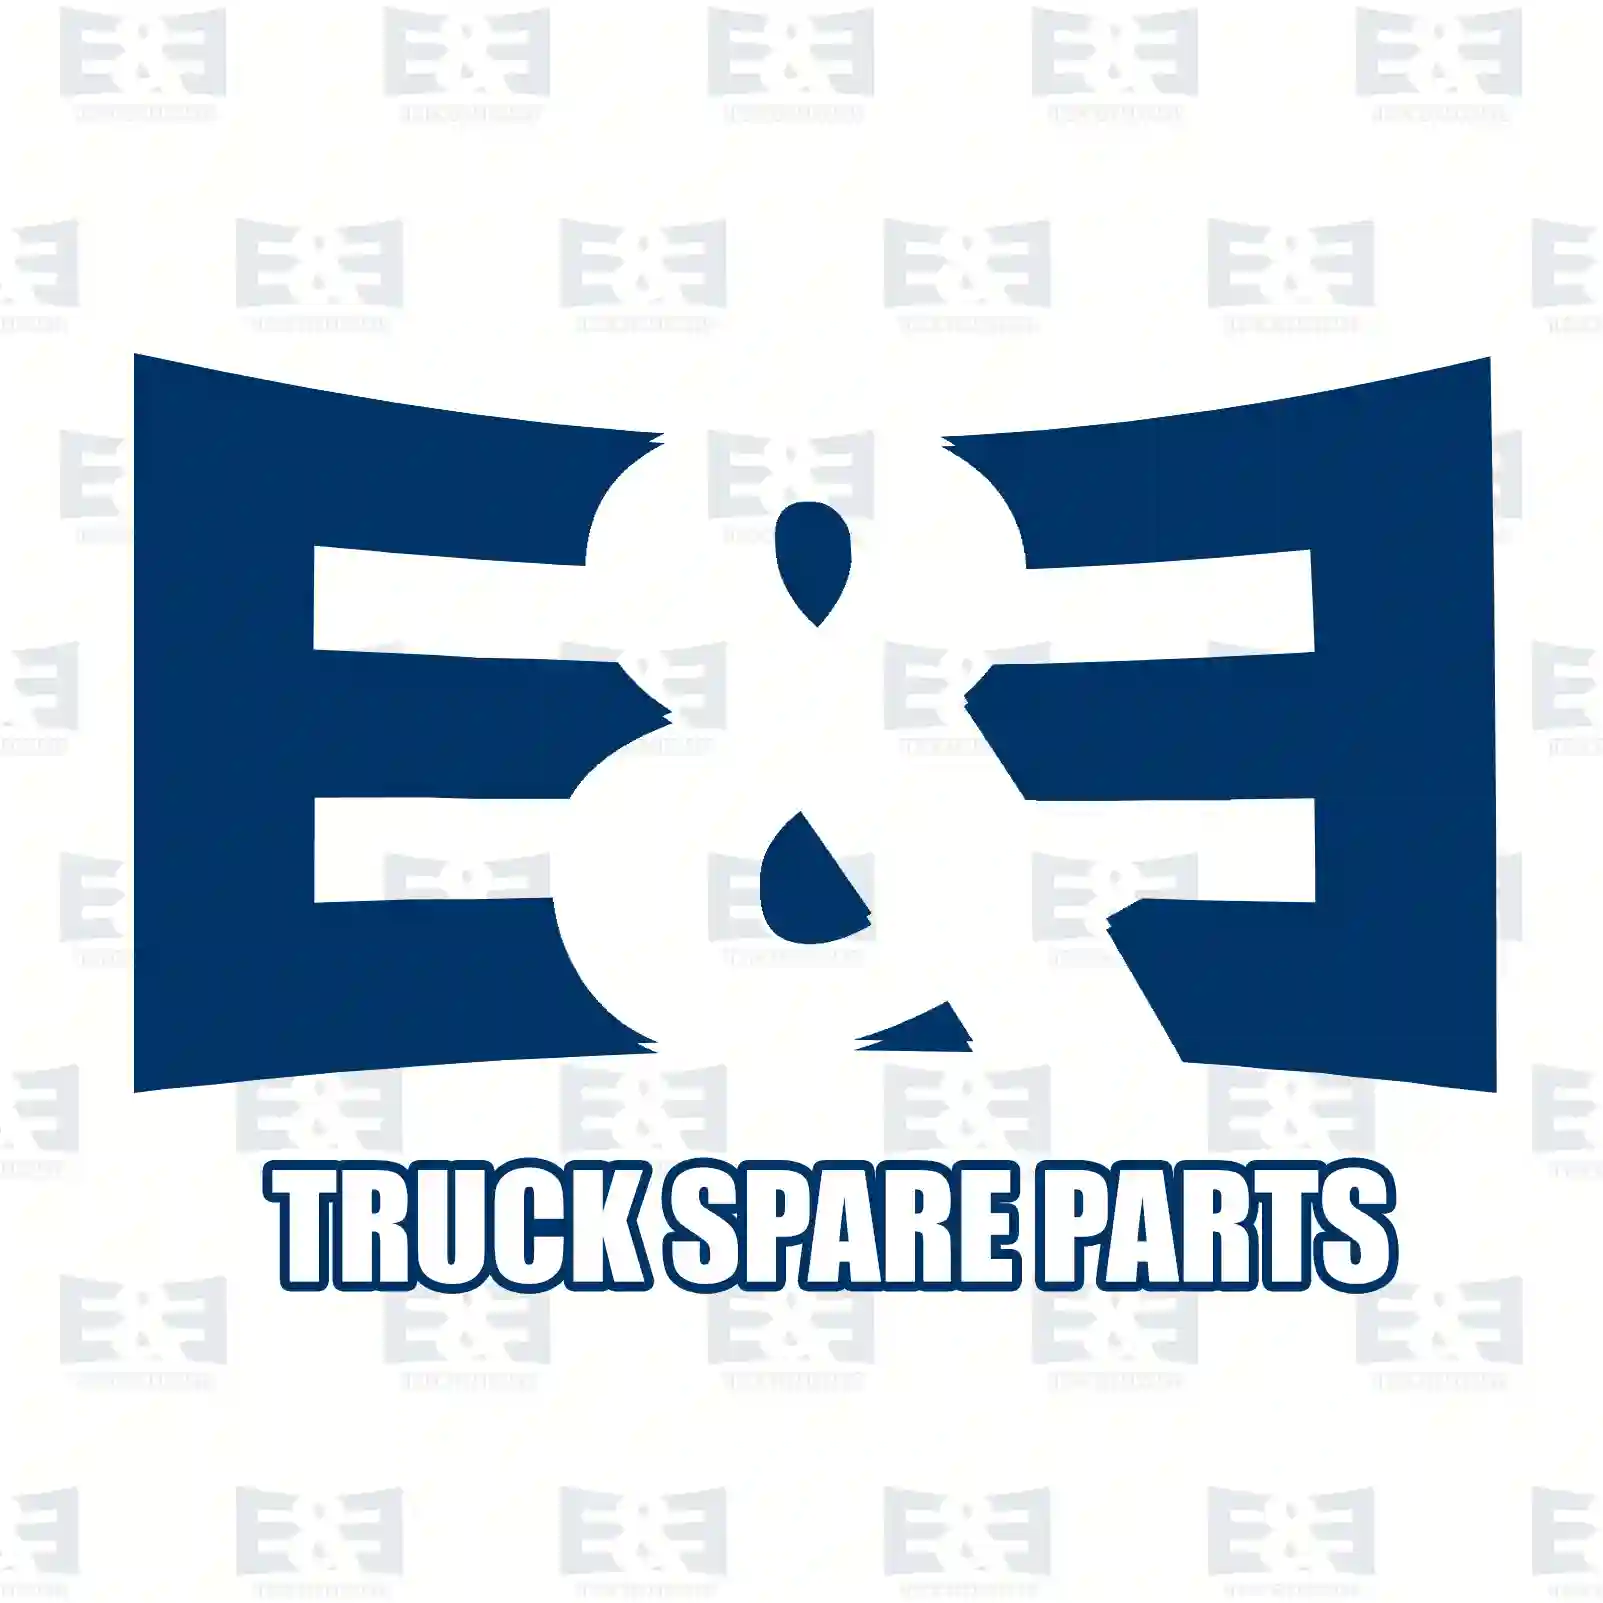 Air Tank Air tank, EE No 2E2296968 ,  oem no:81514010189, 81514010245, 81514016021, , E&E Truck Spare Parts | Truck Spare Parts, Auotomotive Spare Parts